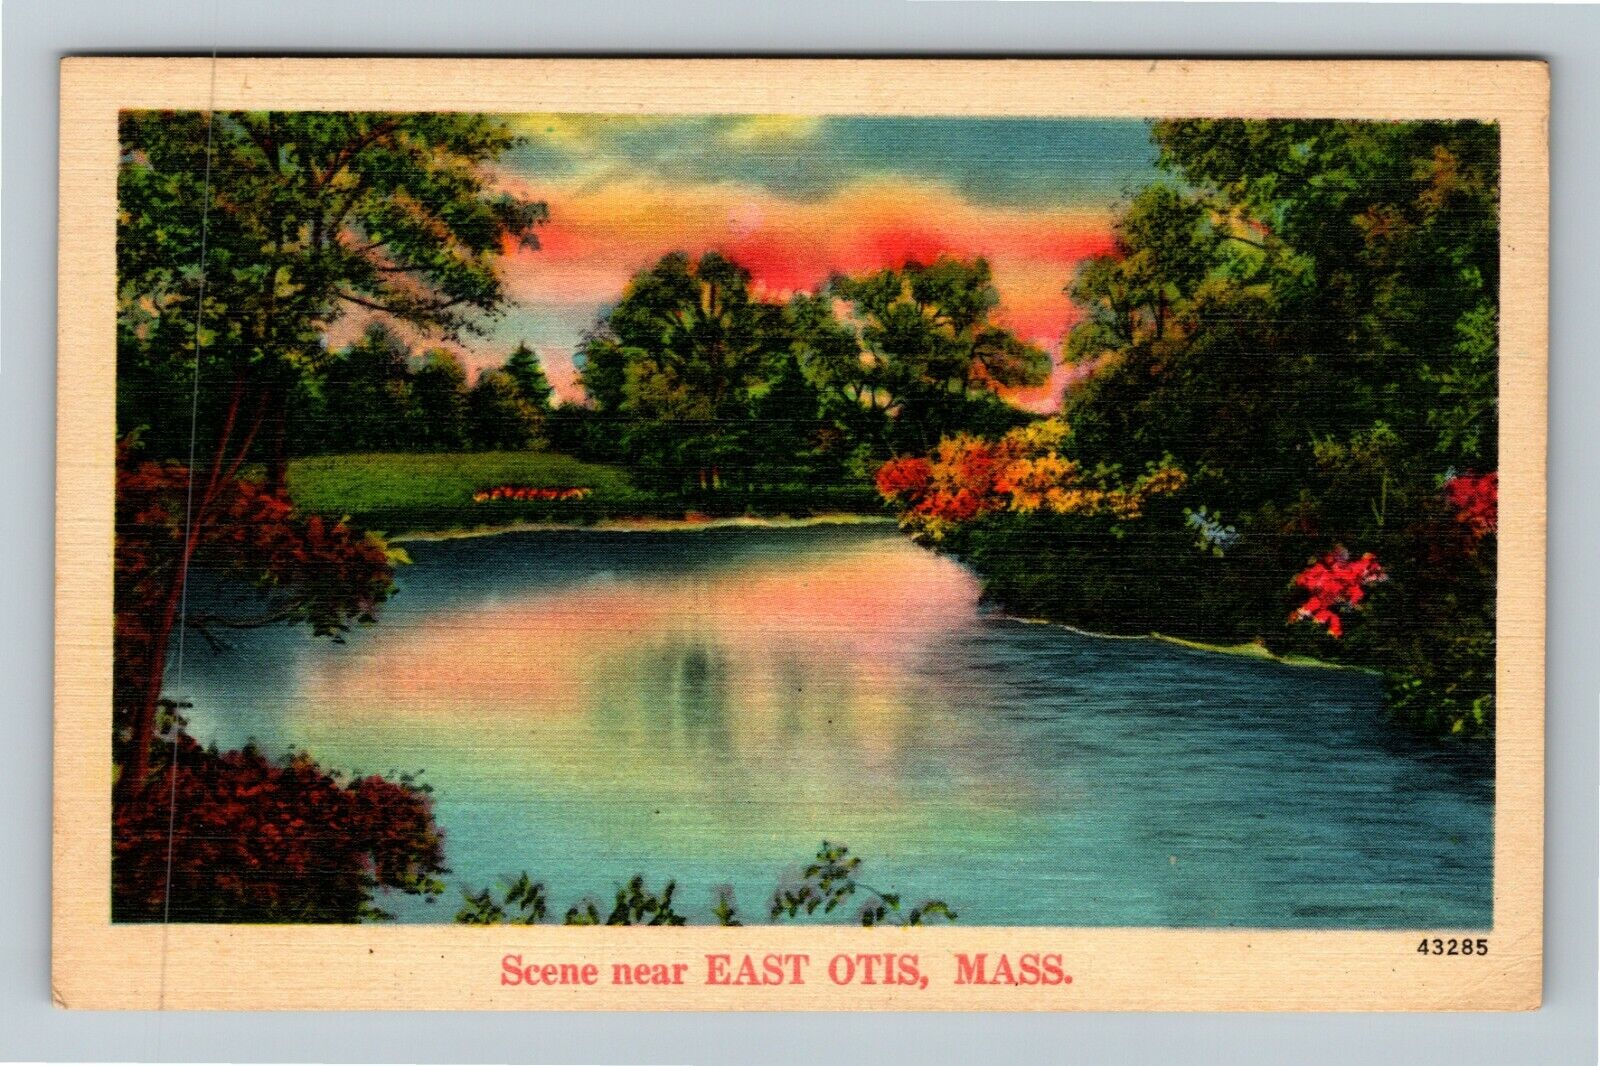 East Otis MA-Massachusetts, Scenic View Along River, Vintage Postcard